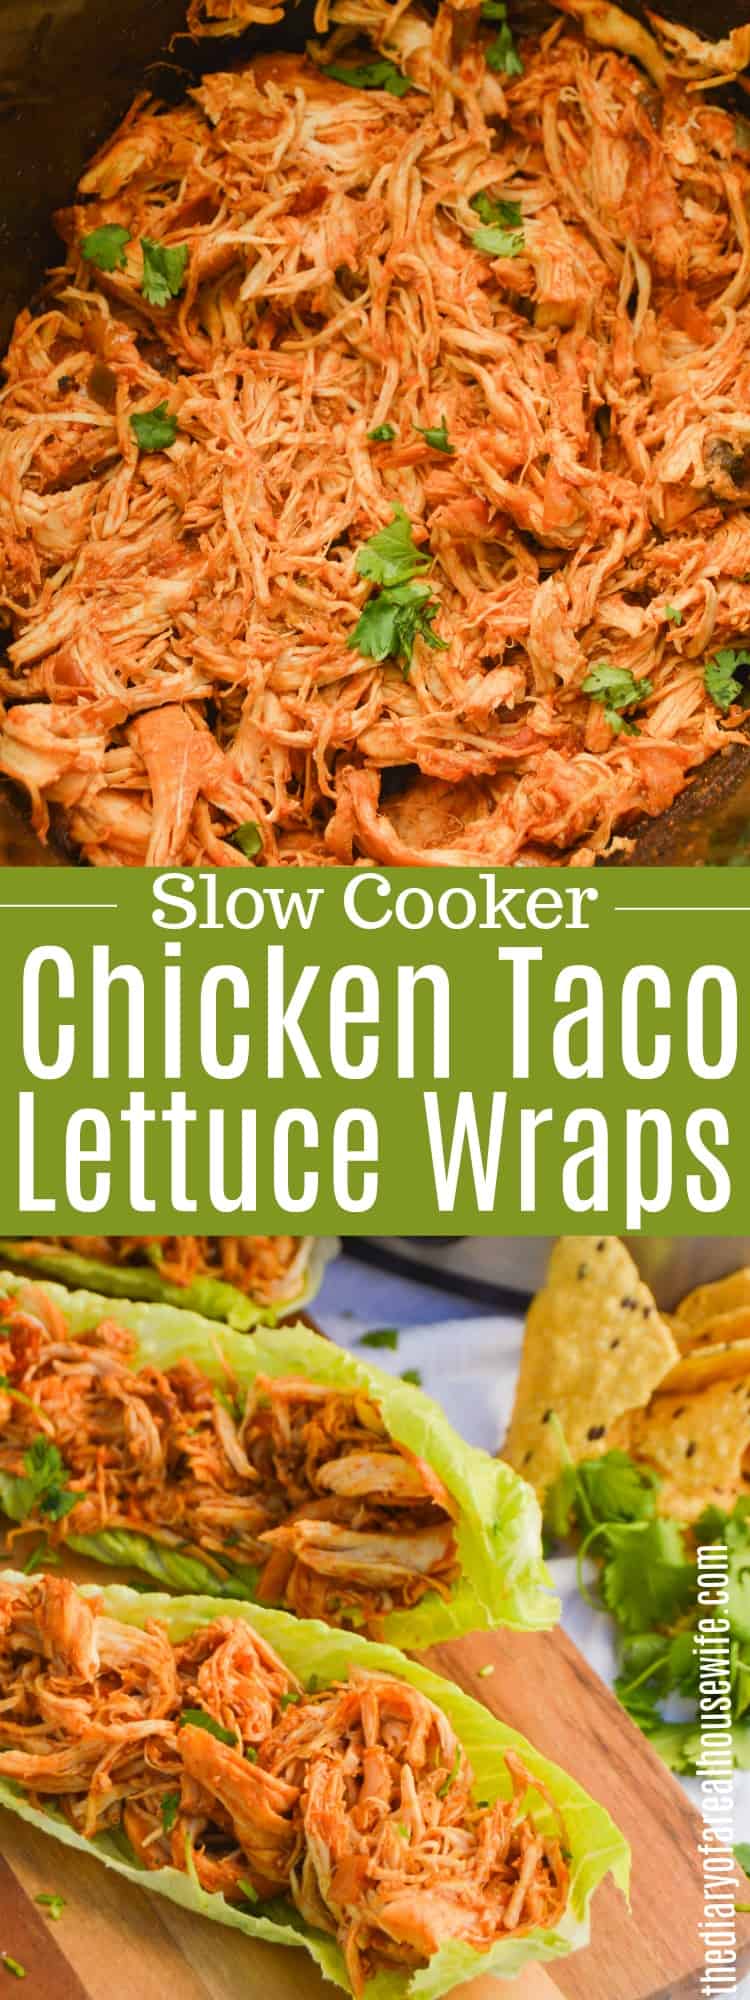 Slow Cooker Chicken Taco Lettuce Wraps